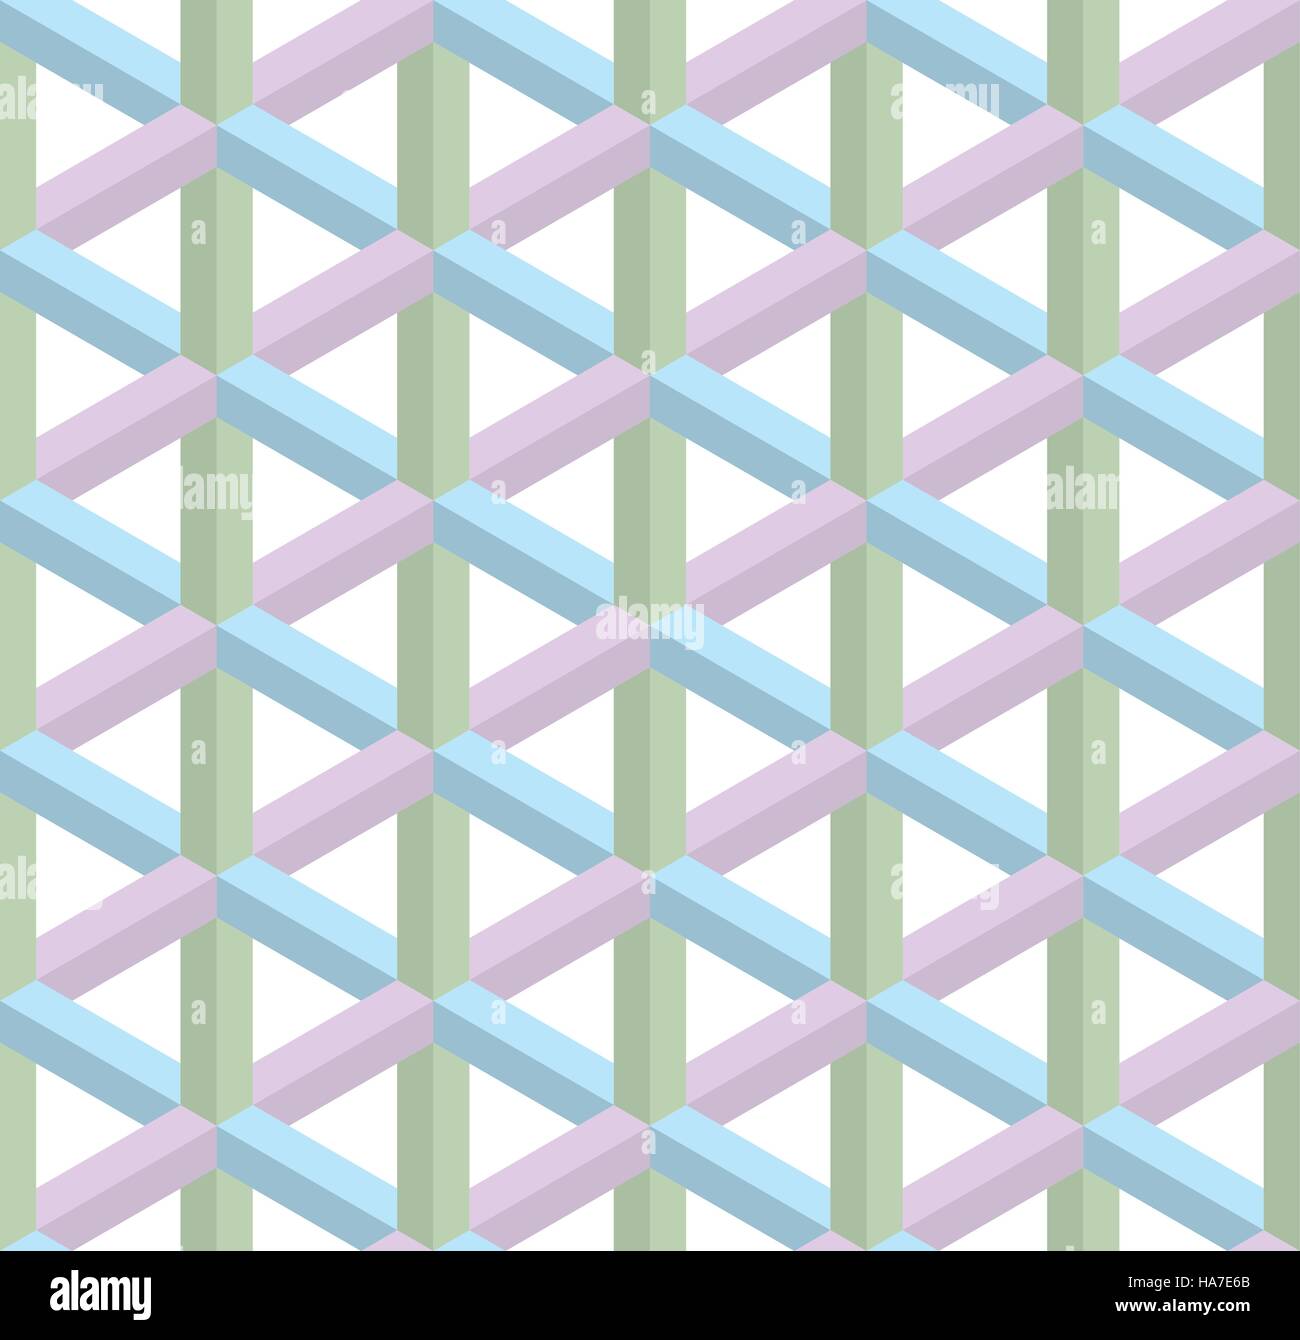 Isometrische Seamless Pattern in Pastelltönen. 3D optische Täuschung Hintergrundtextur. Editierbare EPS10 Vektorgrafik. Stock Vektor